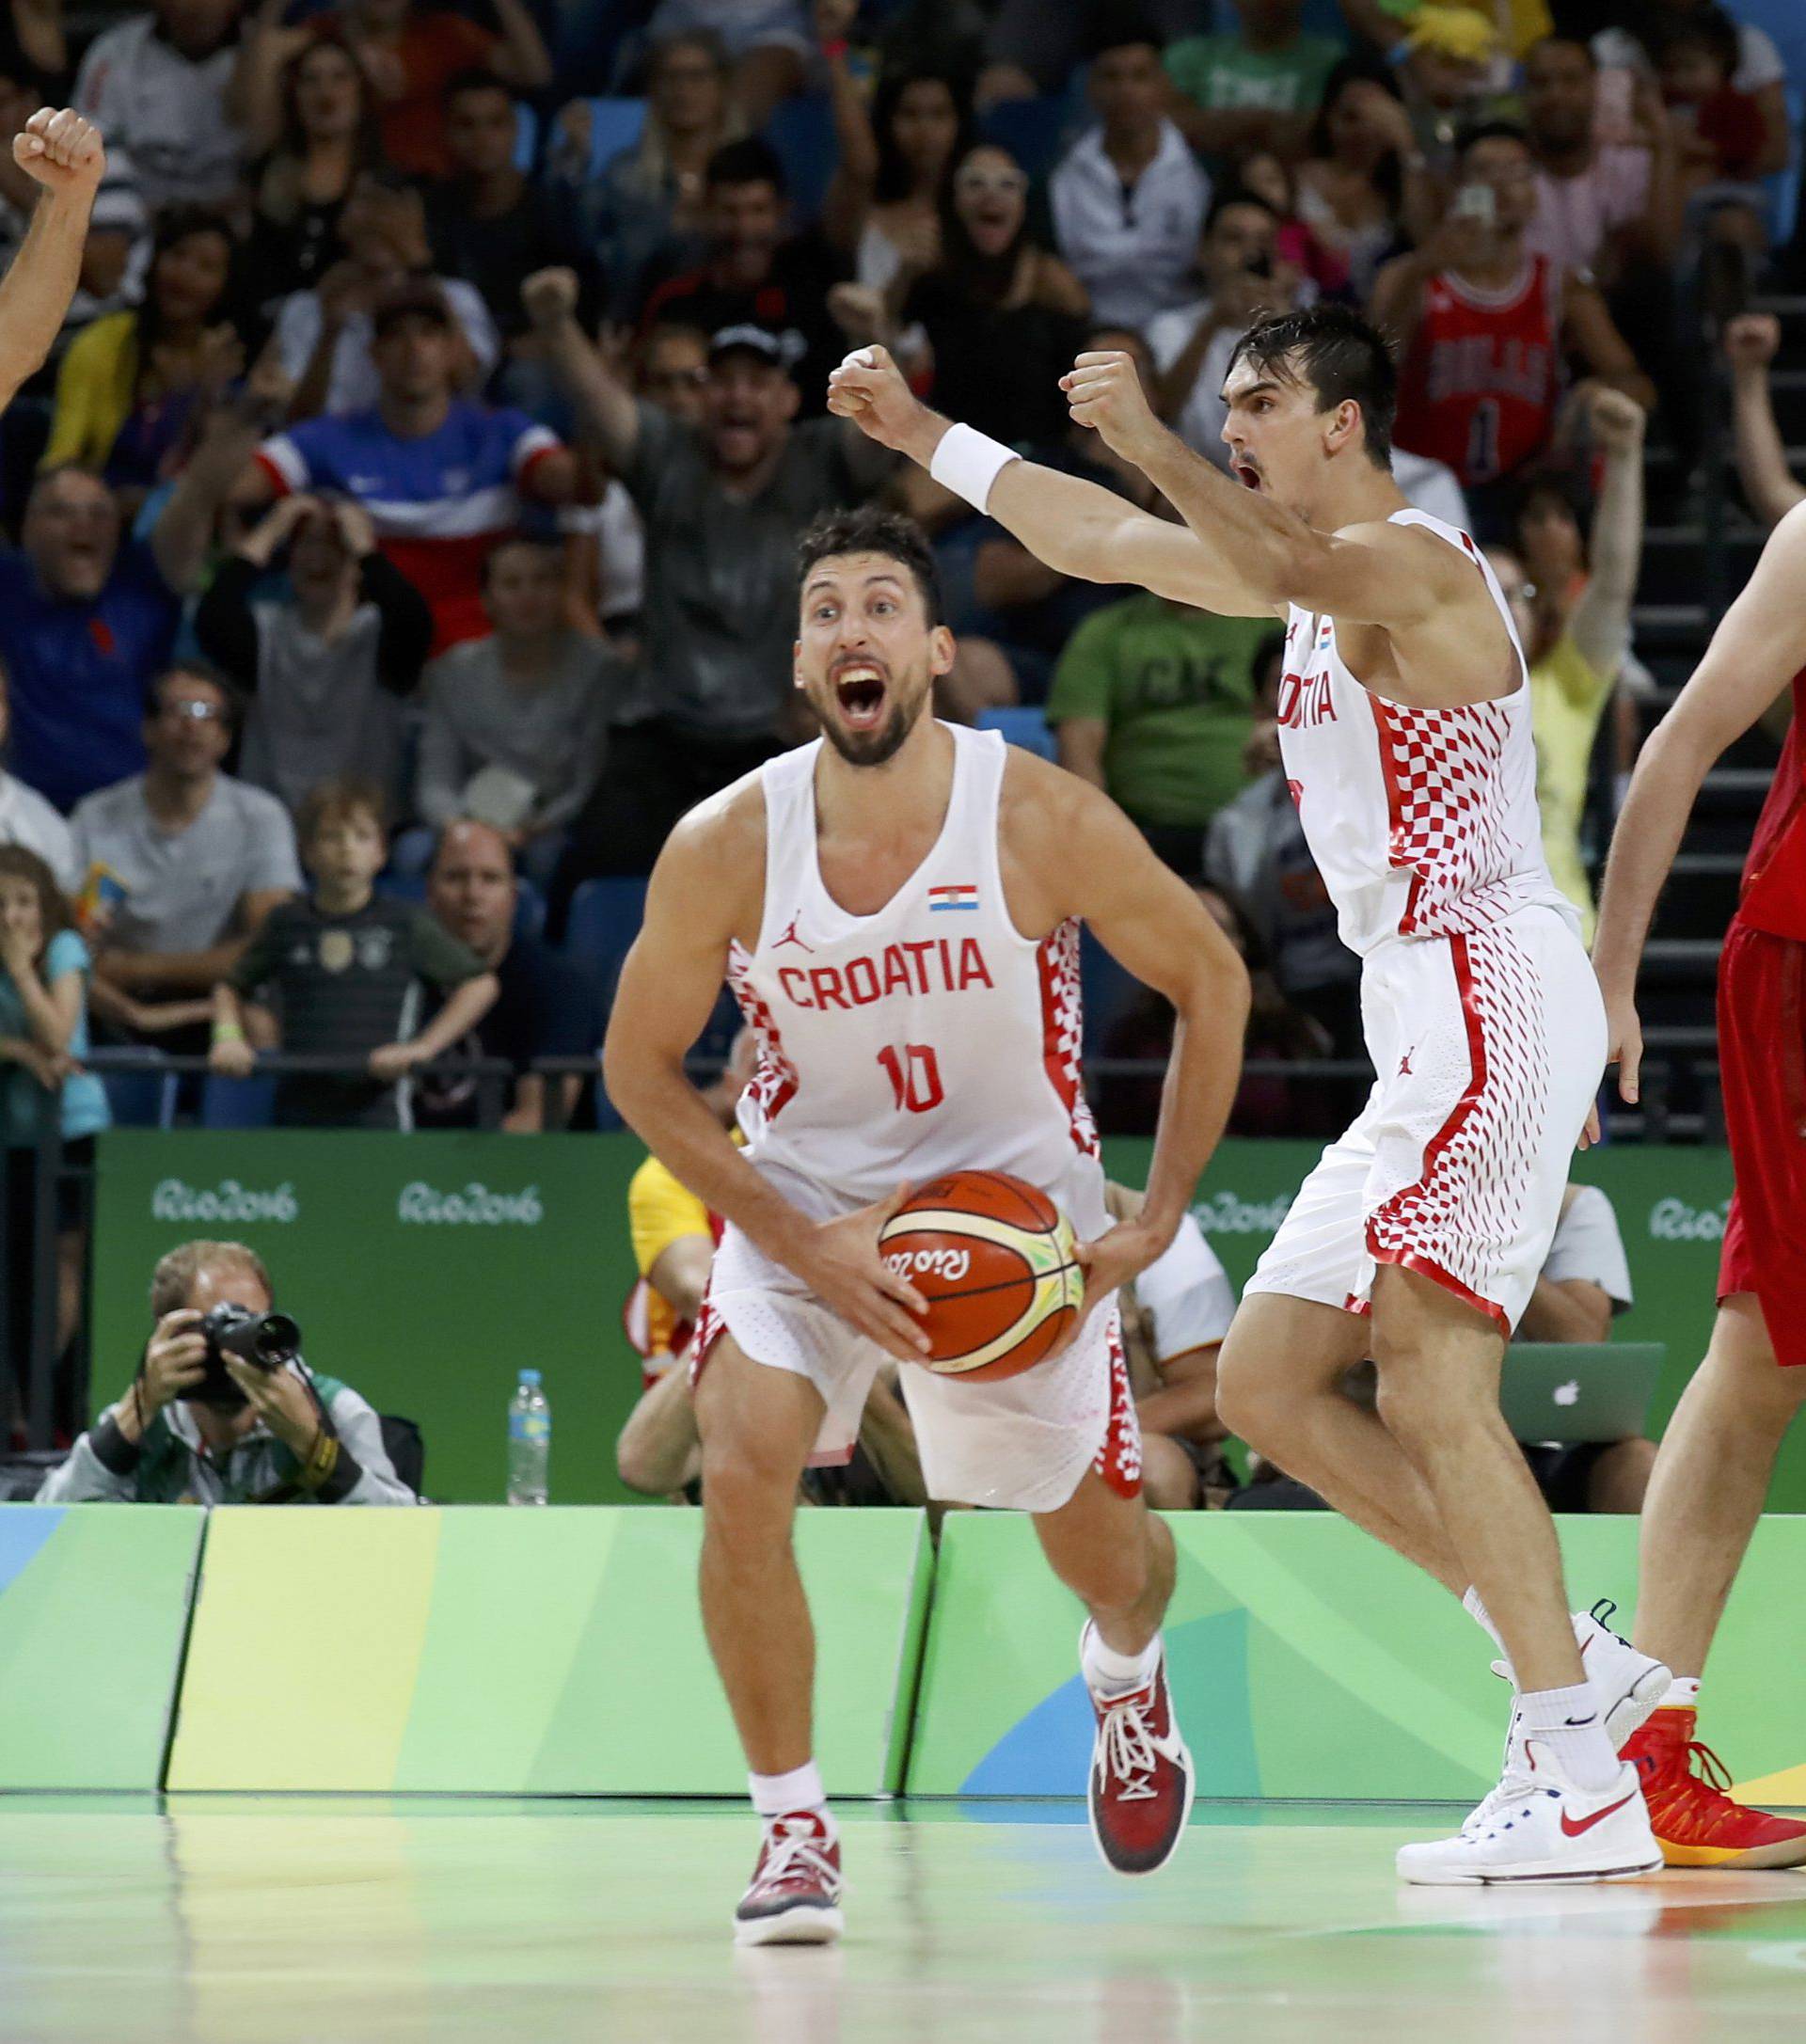 Basketball - Men's Preliminary Round Group B Croatia v Spain